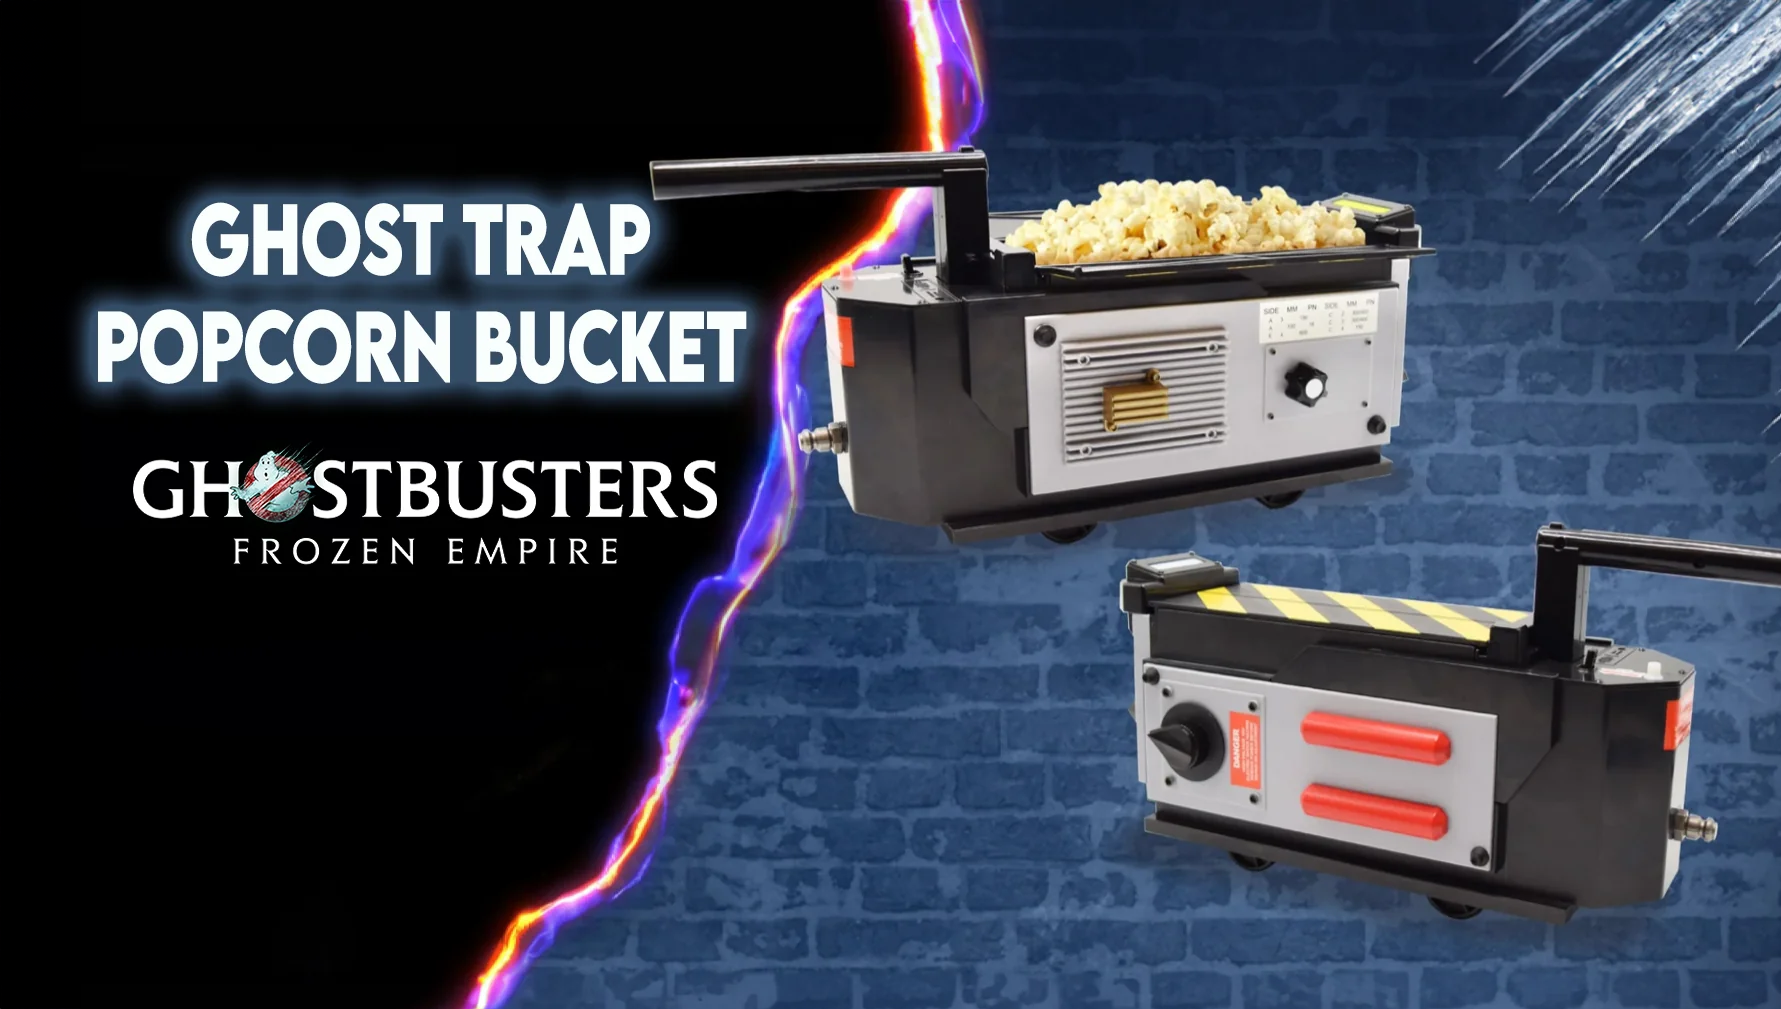 Ghostbusters-popcorn-bokit